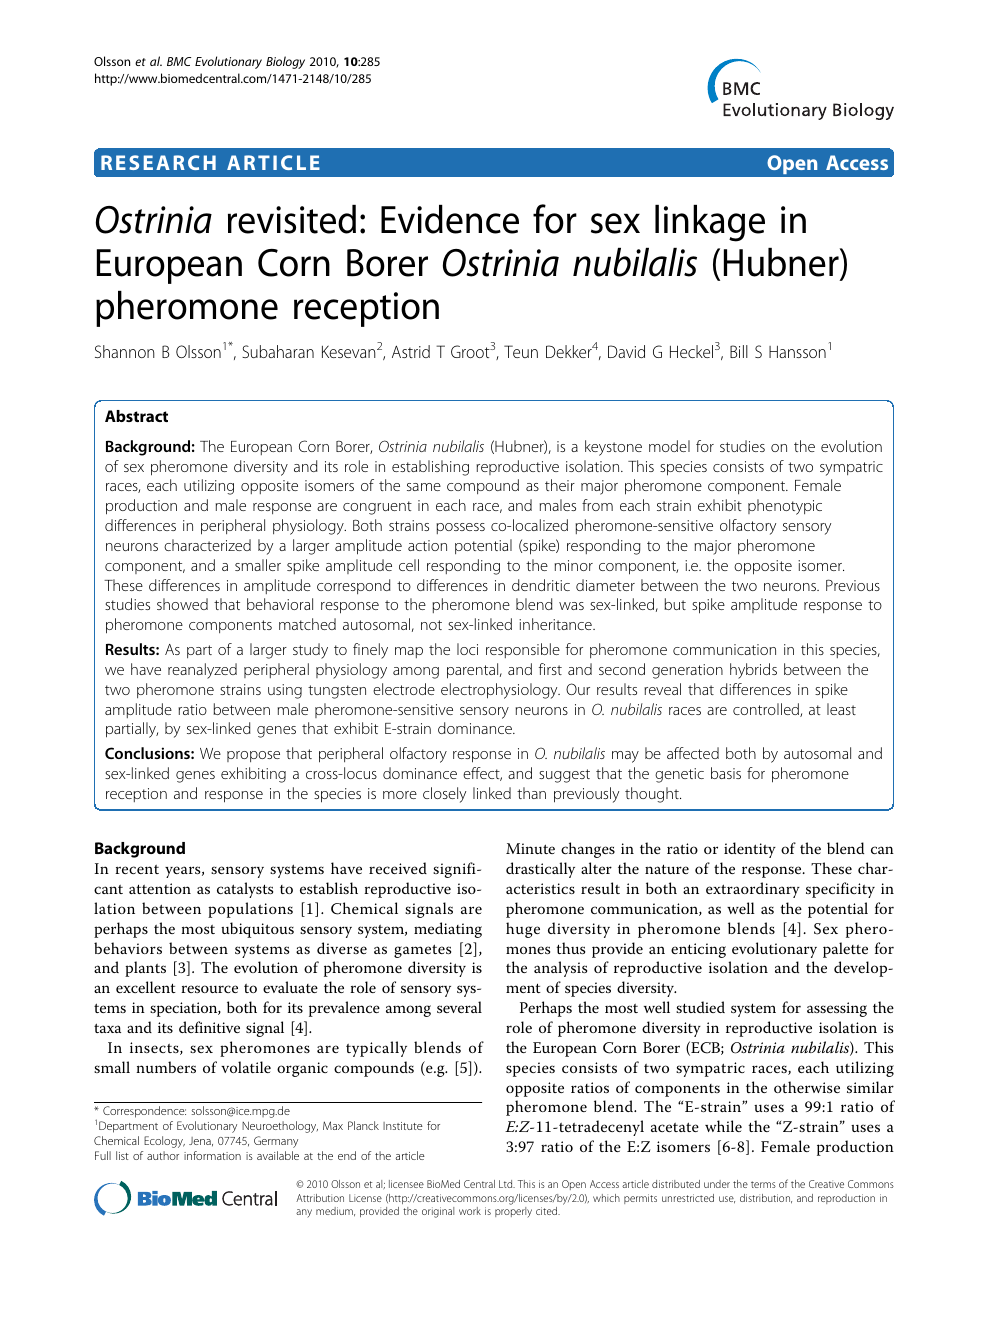 Ostrinia revisited Evidence for sex linkage in European Corn Borer Ostrinia nubilalis (Hubner) pheromone reception